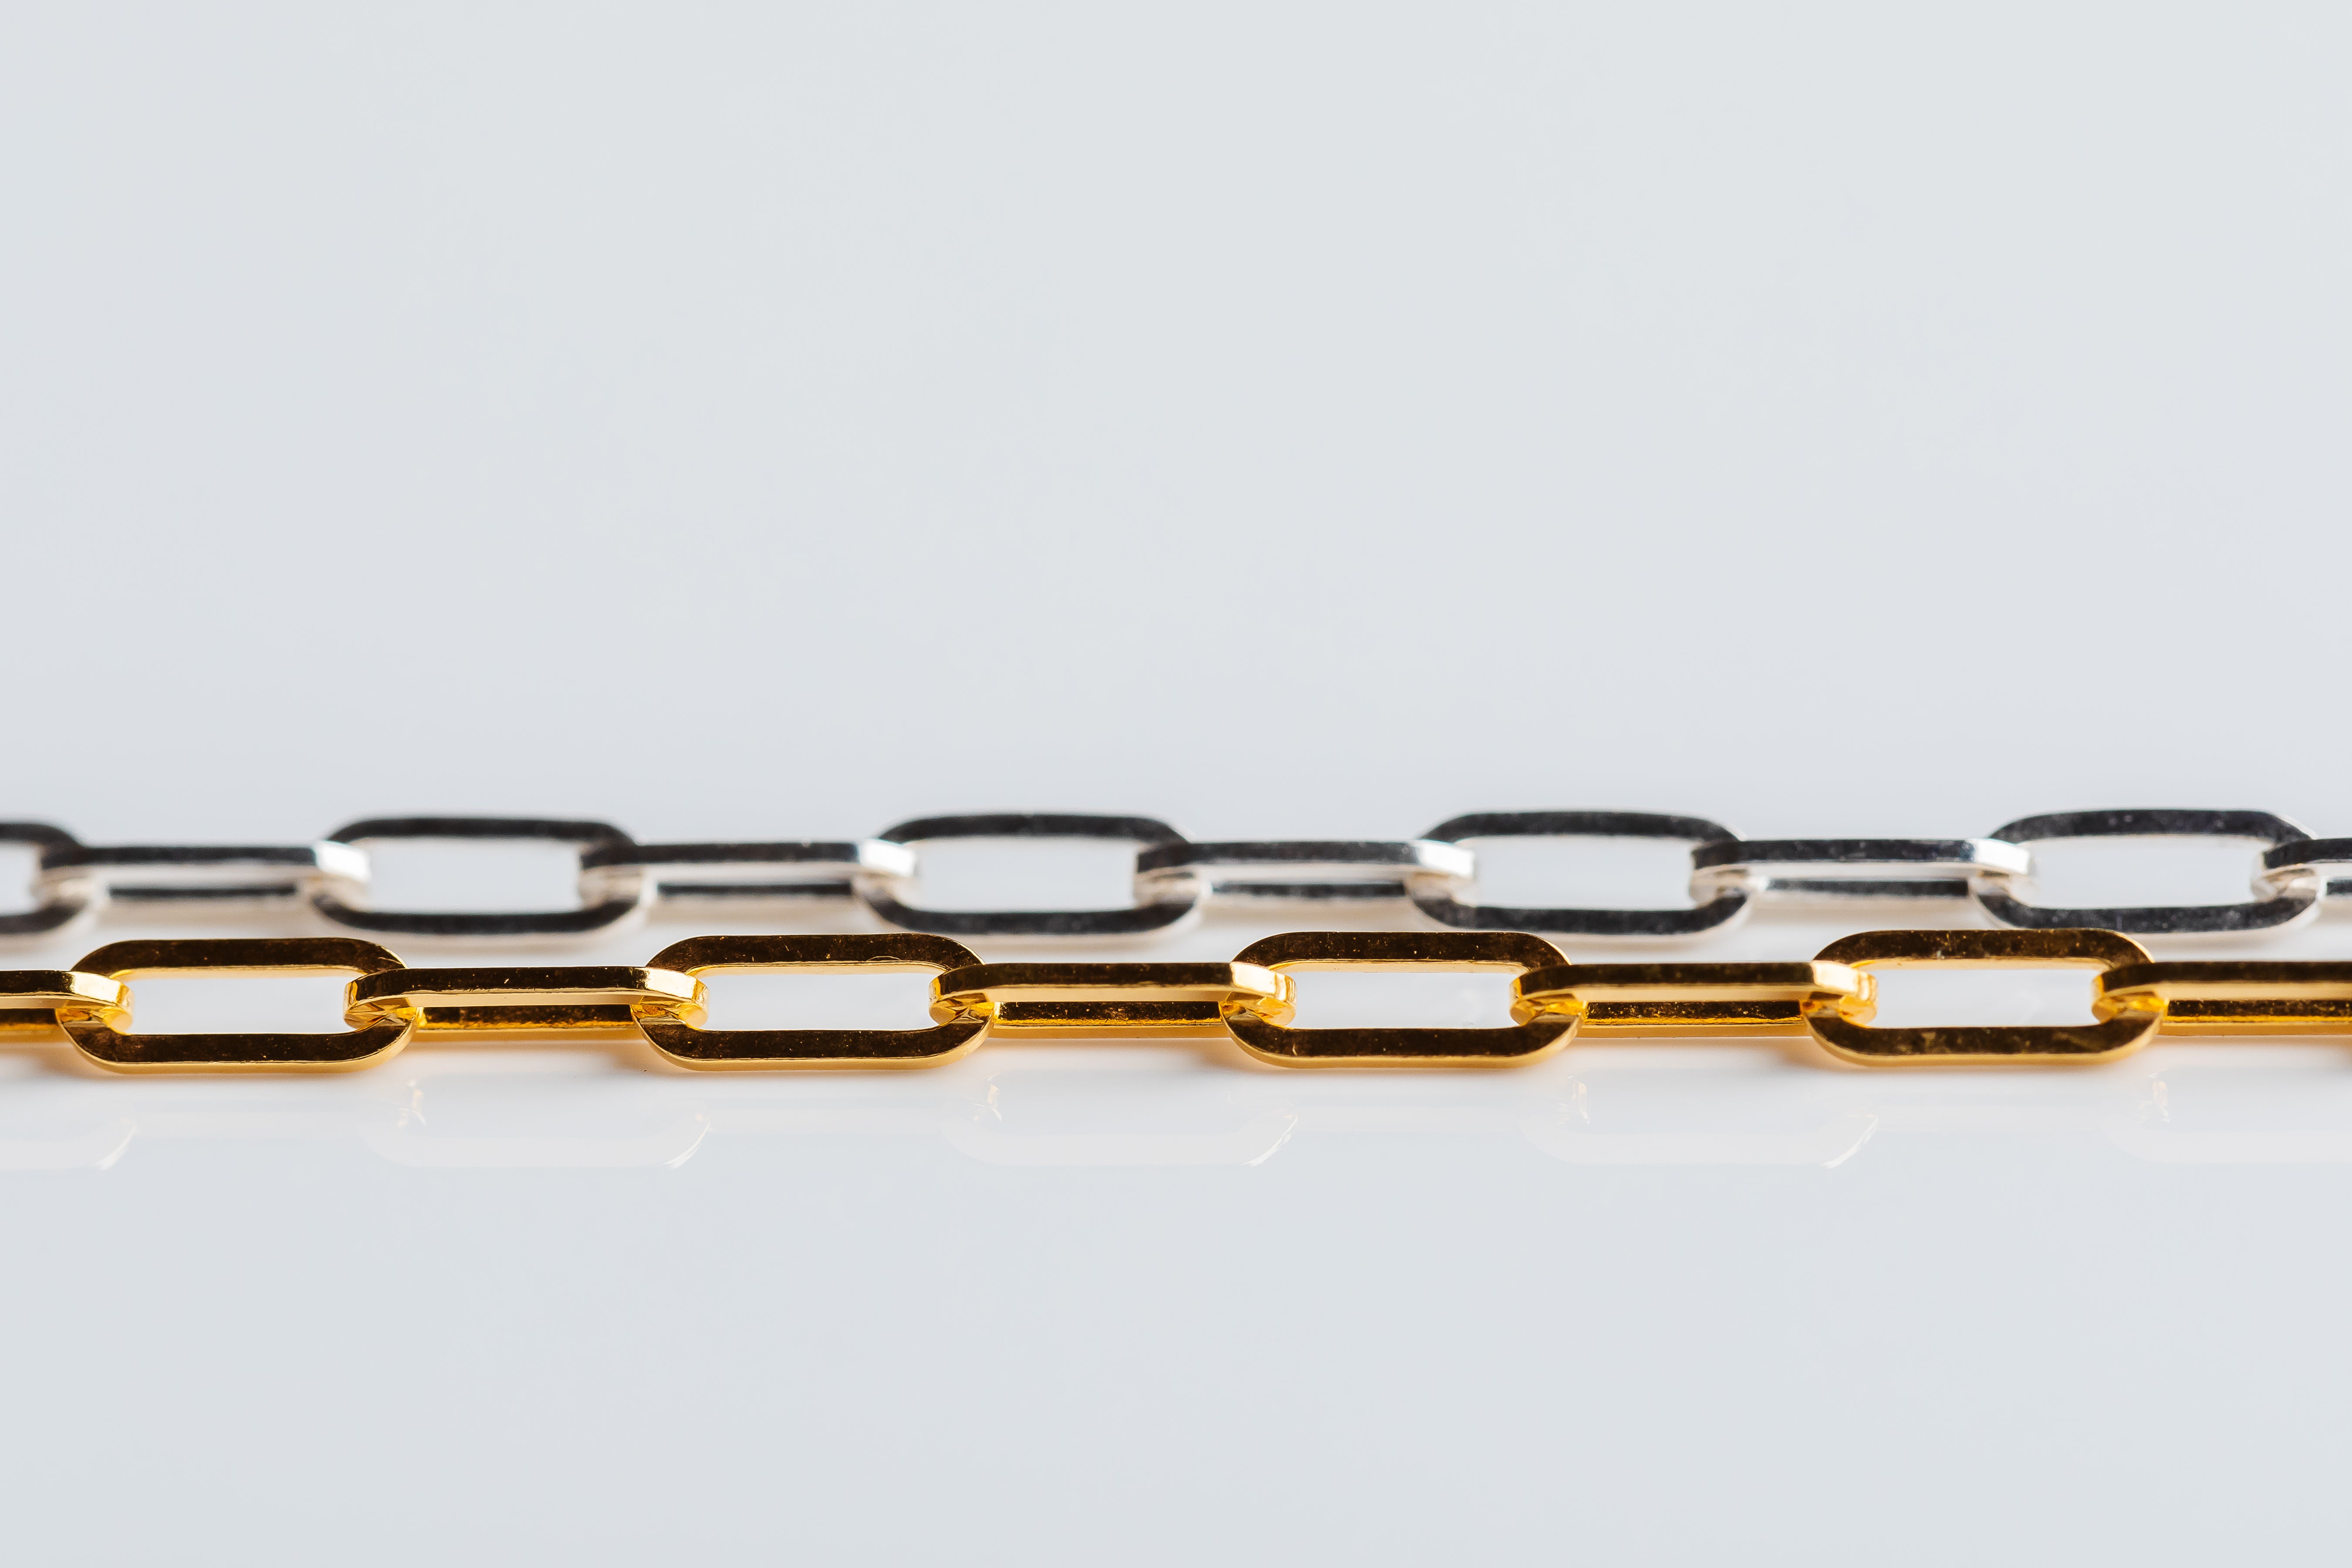 Gold Paperclip Chain Bracelet